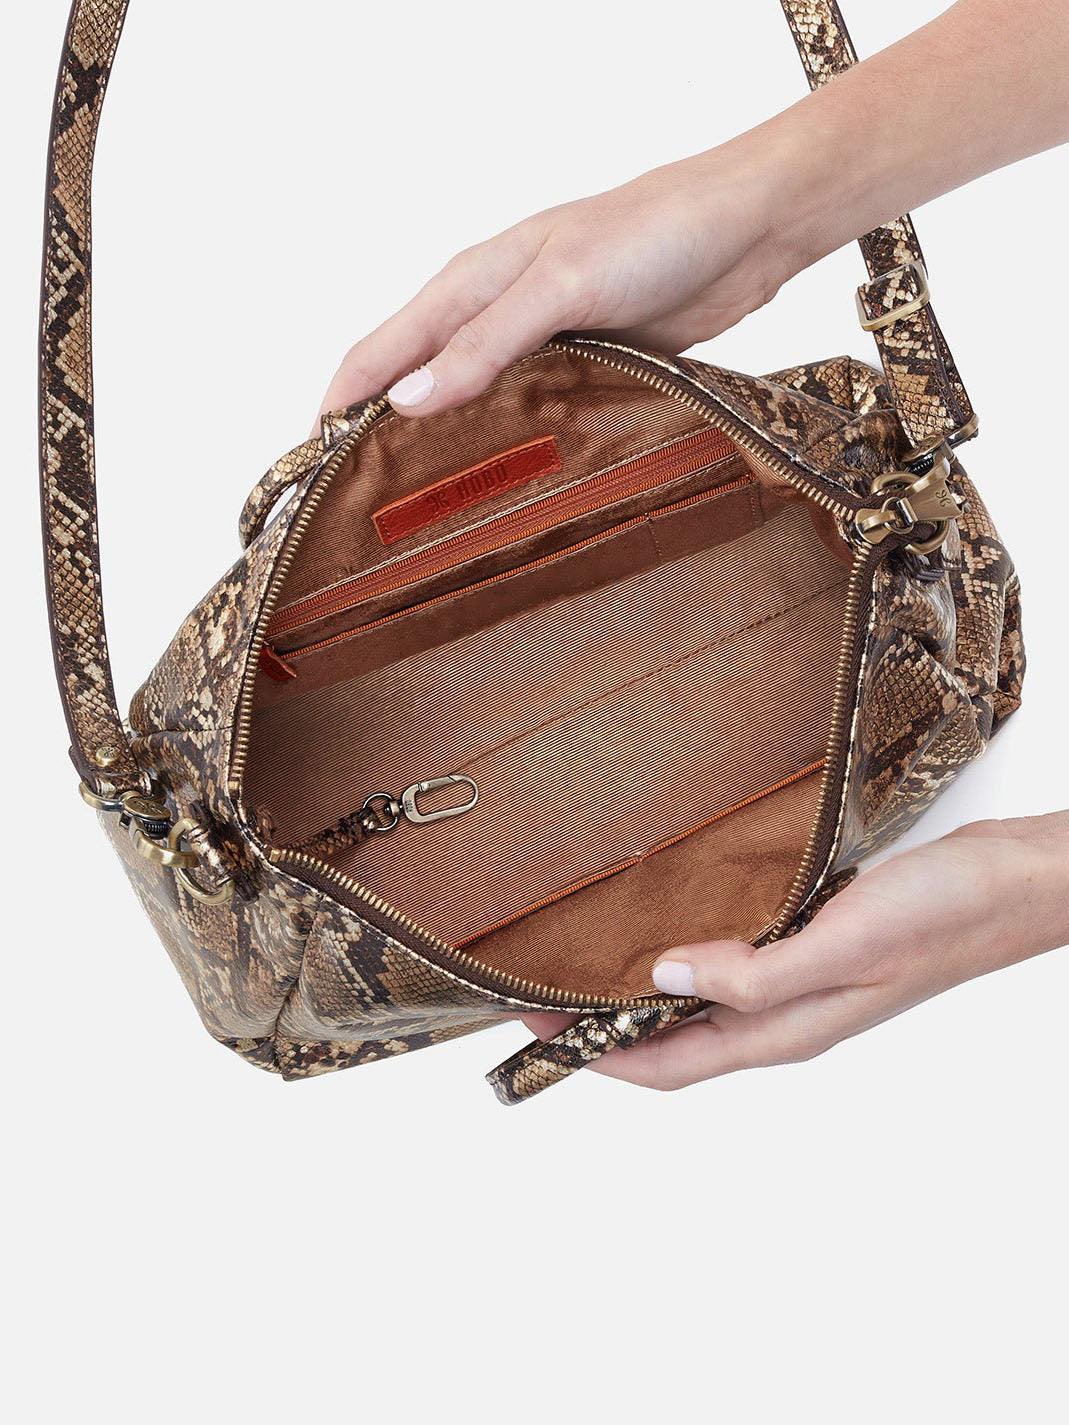 hobo sheila medium satchel in golden snake printed leather